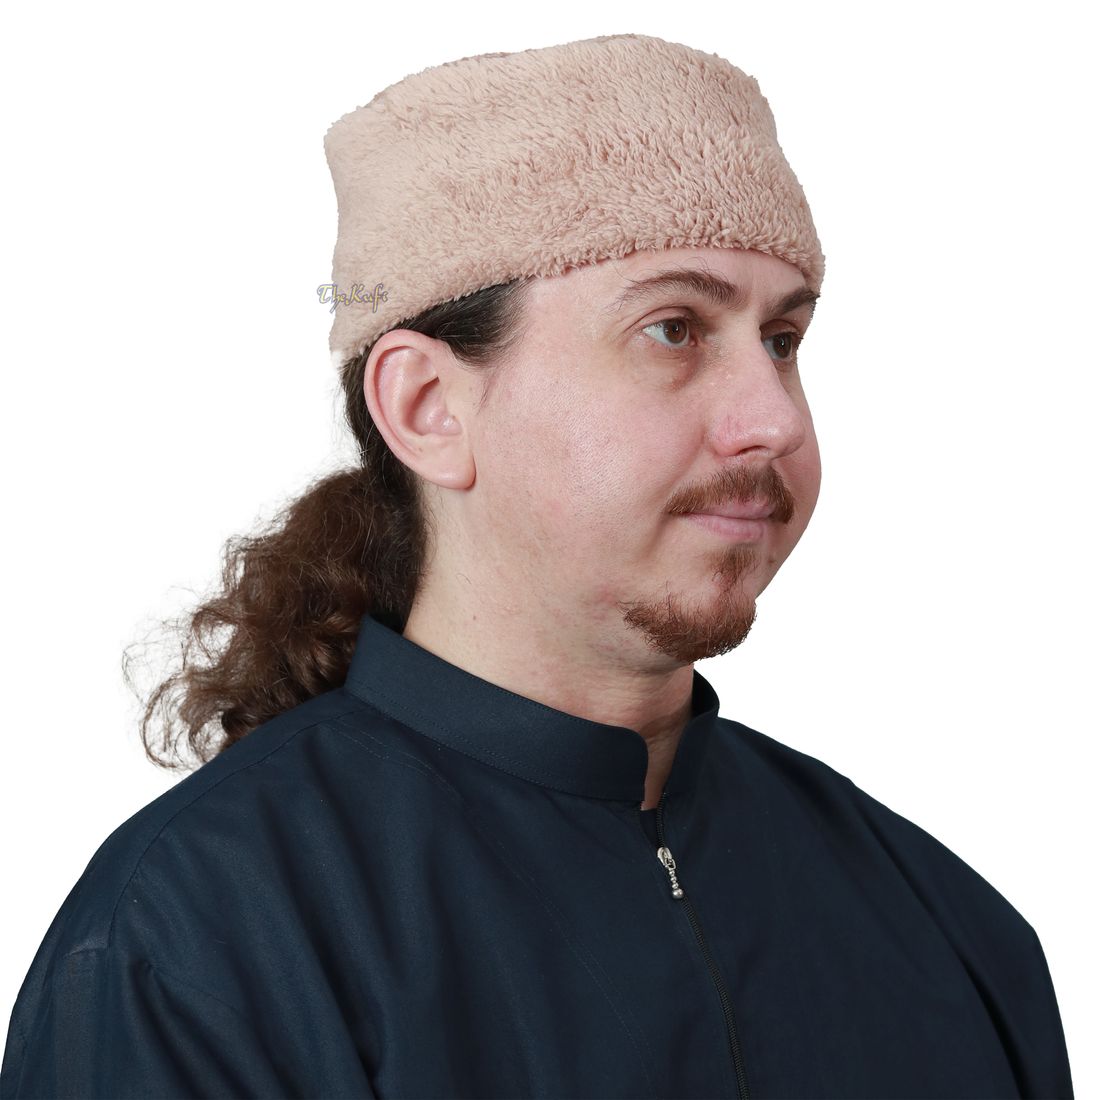 Beige Winter Kufi Faux Fur Warm Chechen Uzbeki Style Islamic Hat Plush One-size Medium-large Stretchy 4-inch Tall Head Cover Muslim